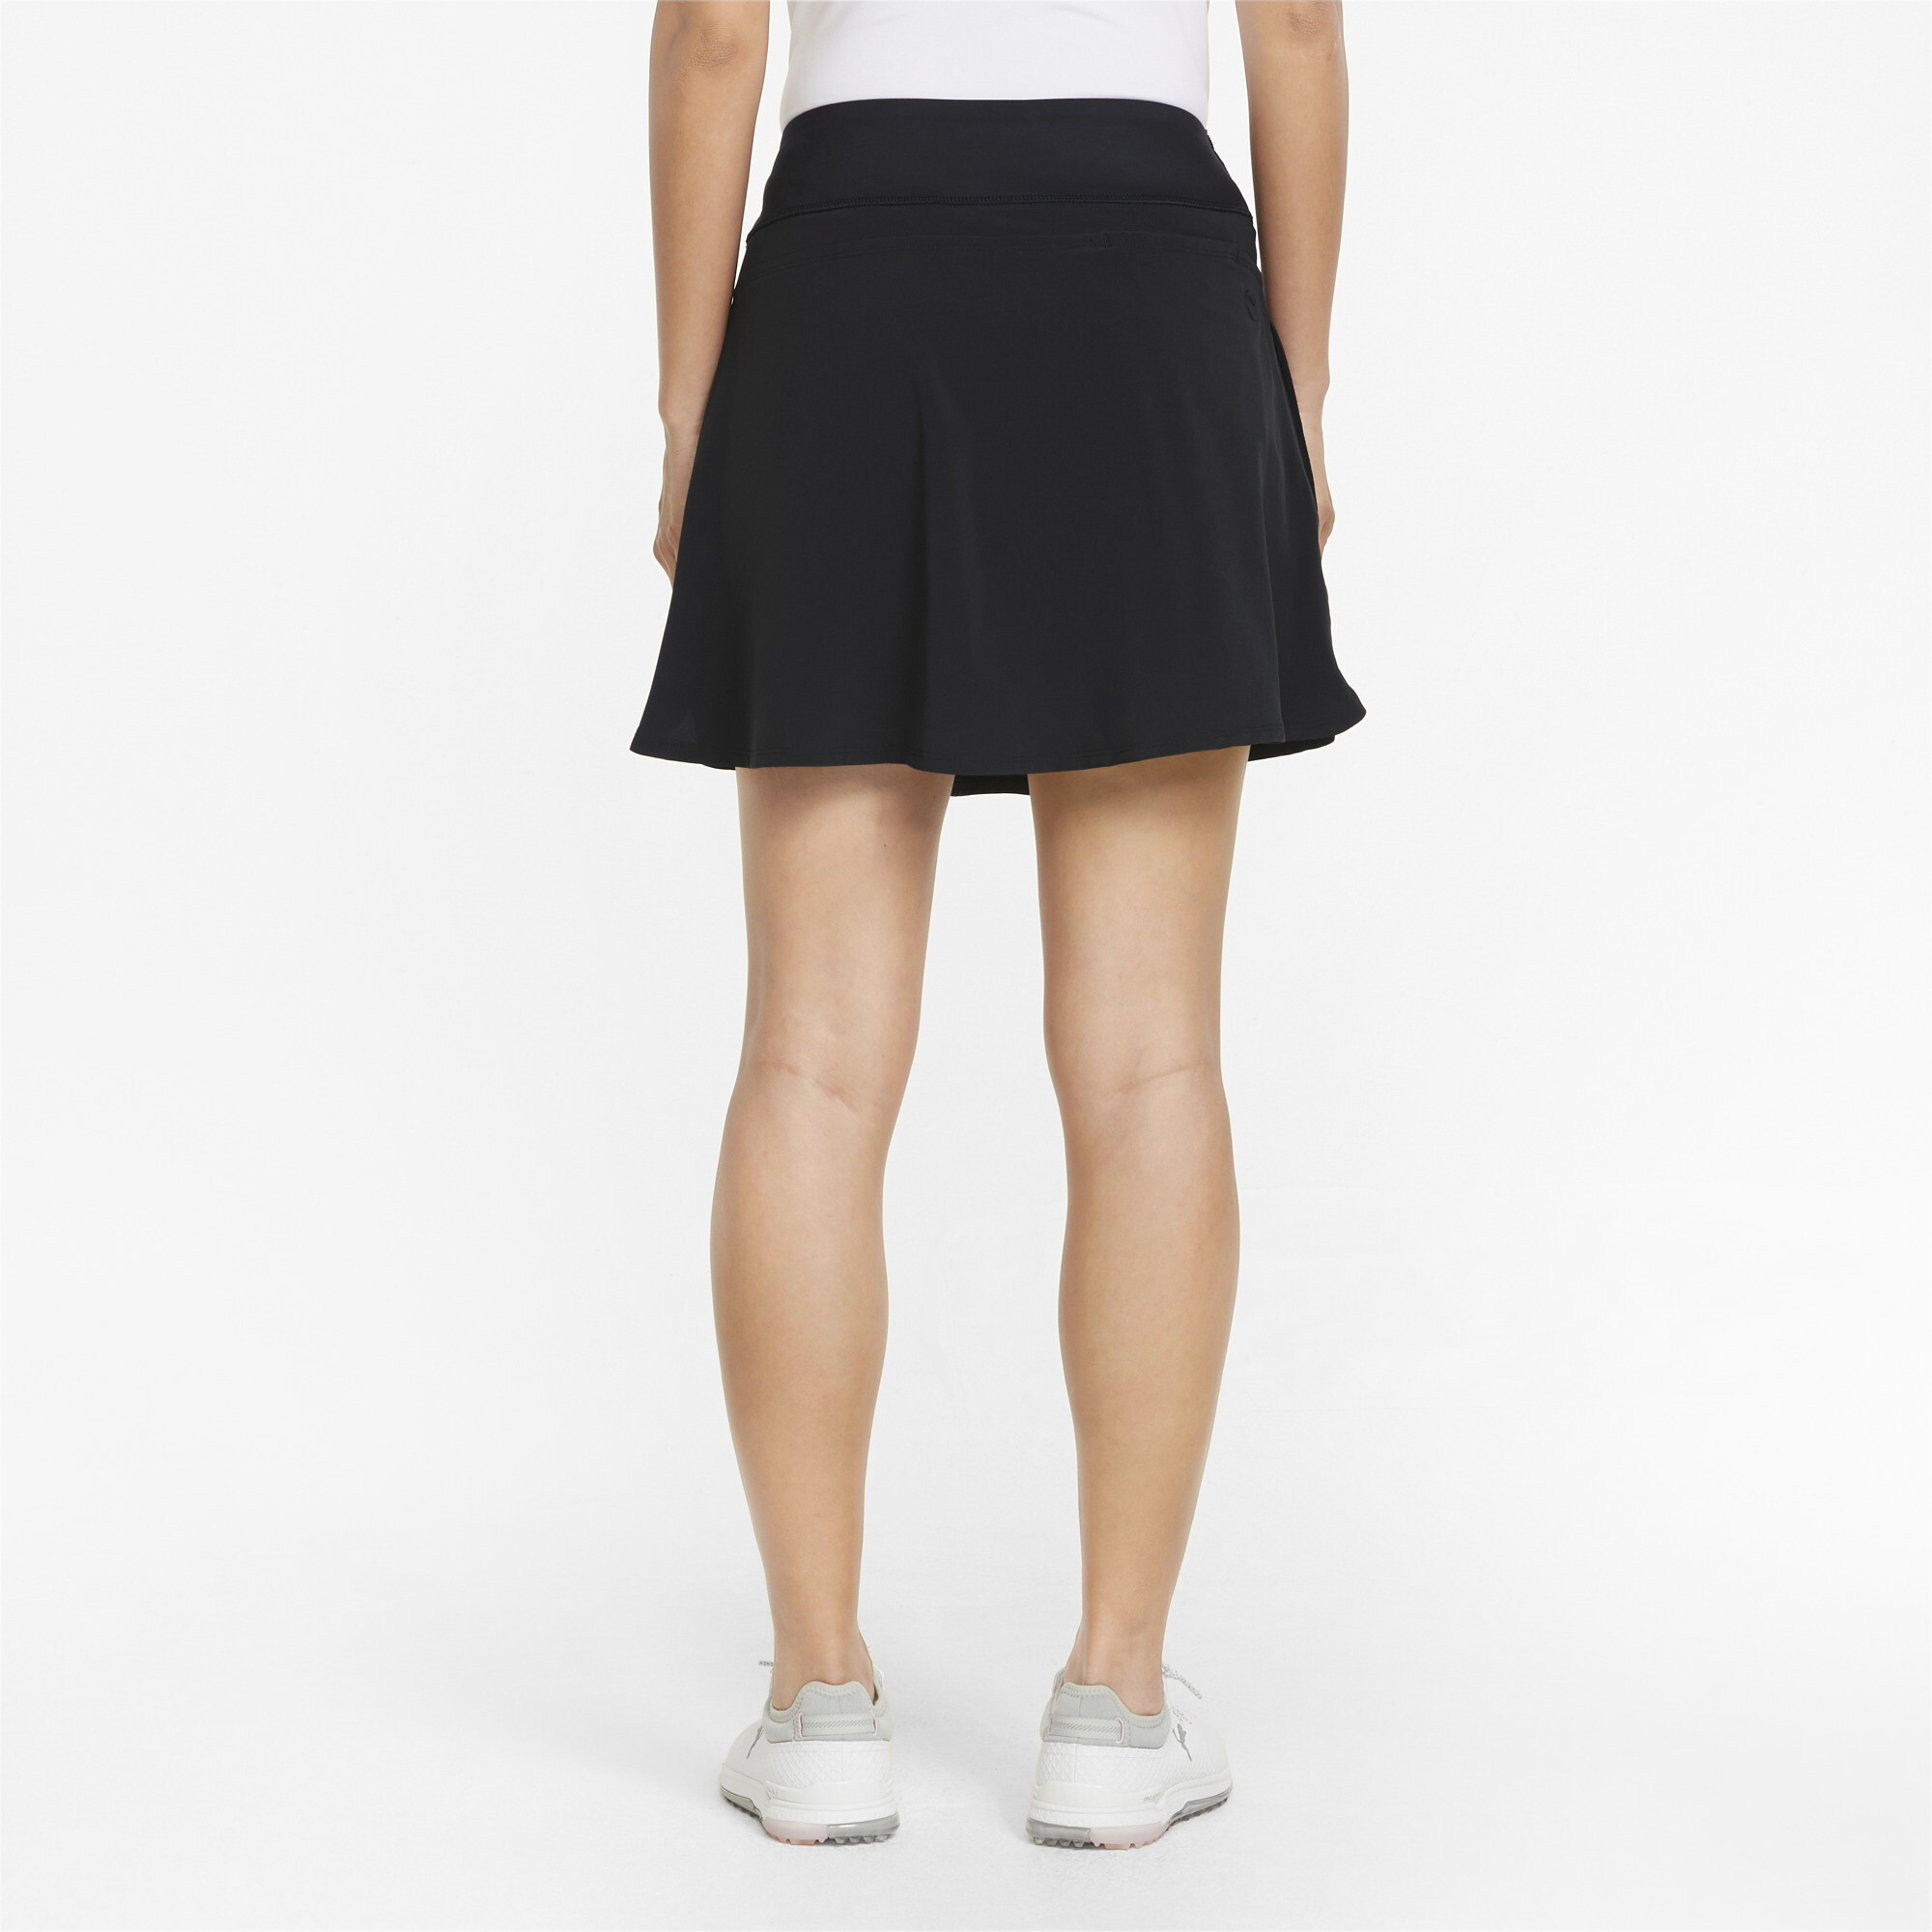 Women's Puma PWRSHAPE Solid's Golf Skirt, Black, Size XXS/S, Clothing